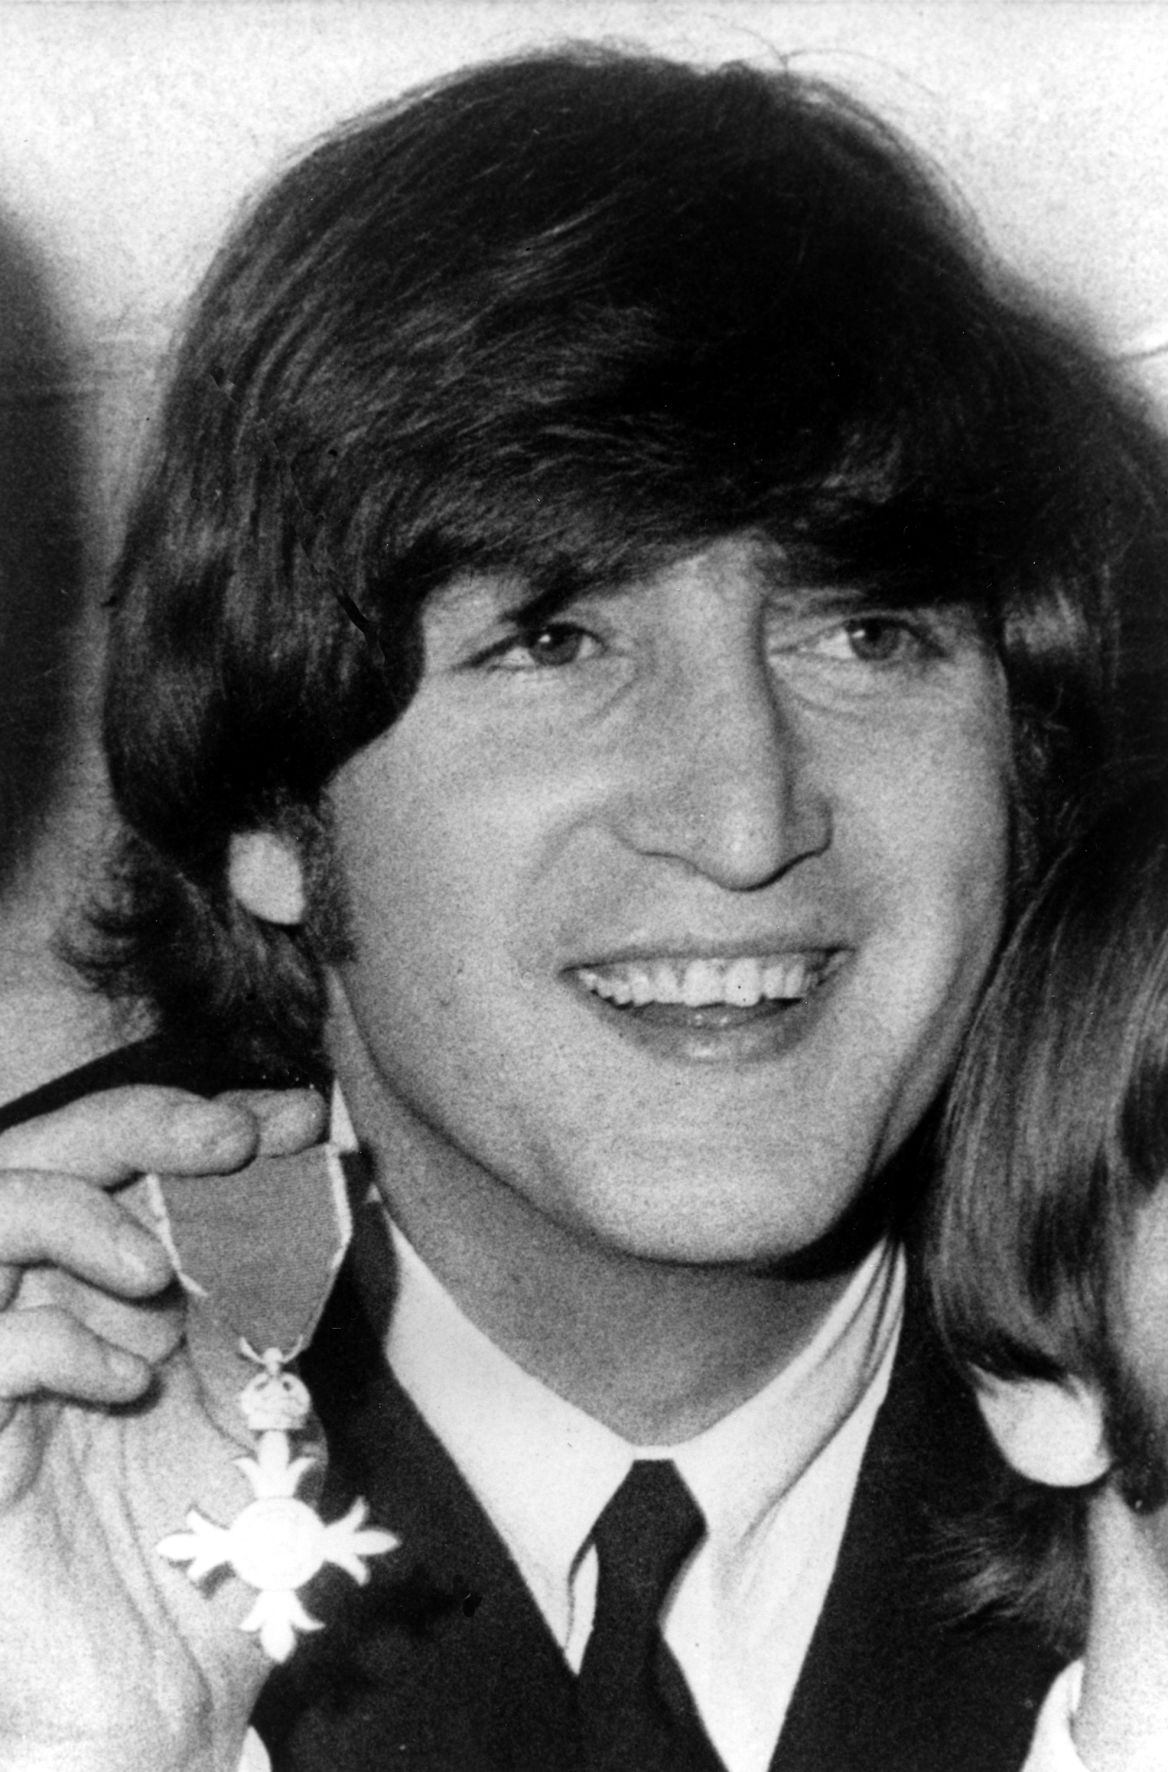 Gallery: Happy birthday, John Lennon | Digital Exclusives: Photo